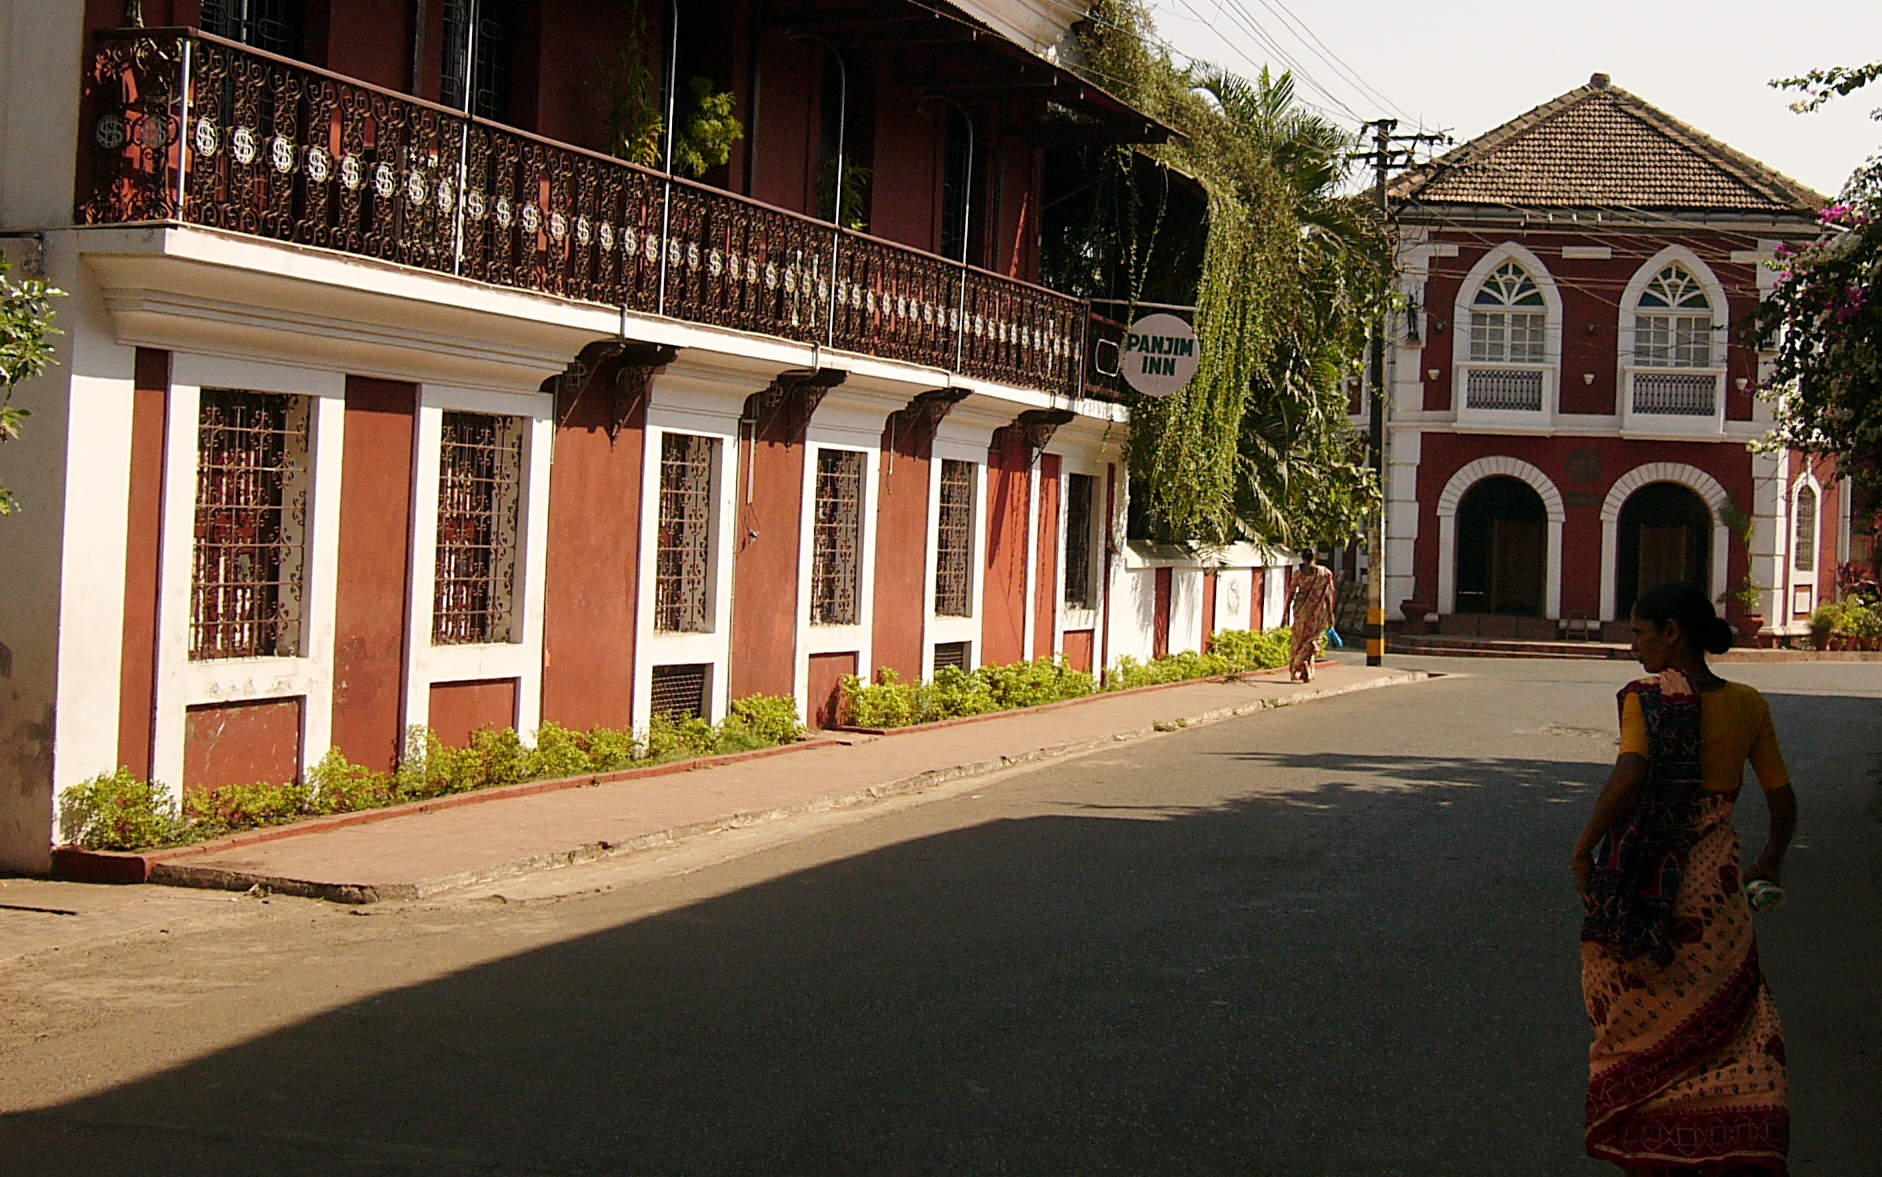 Portuguese heritage colony in Fontainhas, Goa - RavenousLegs